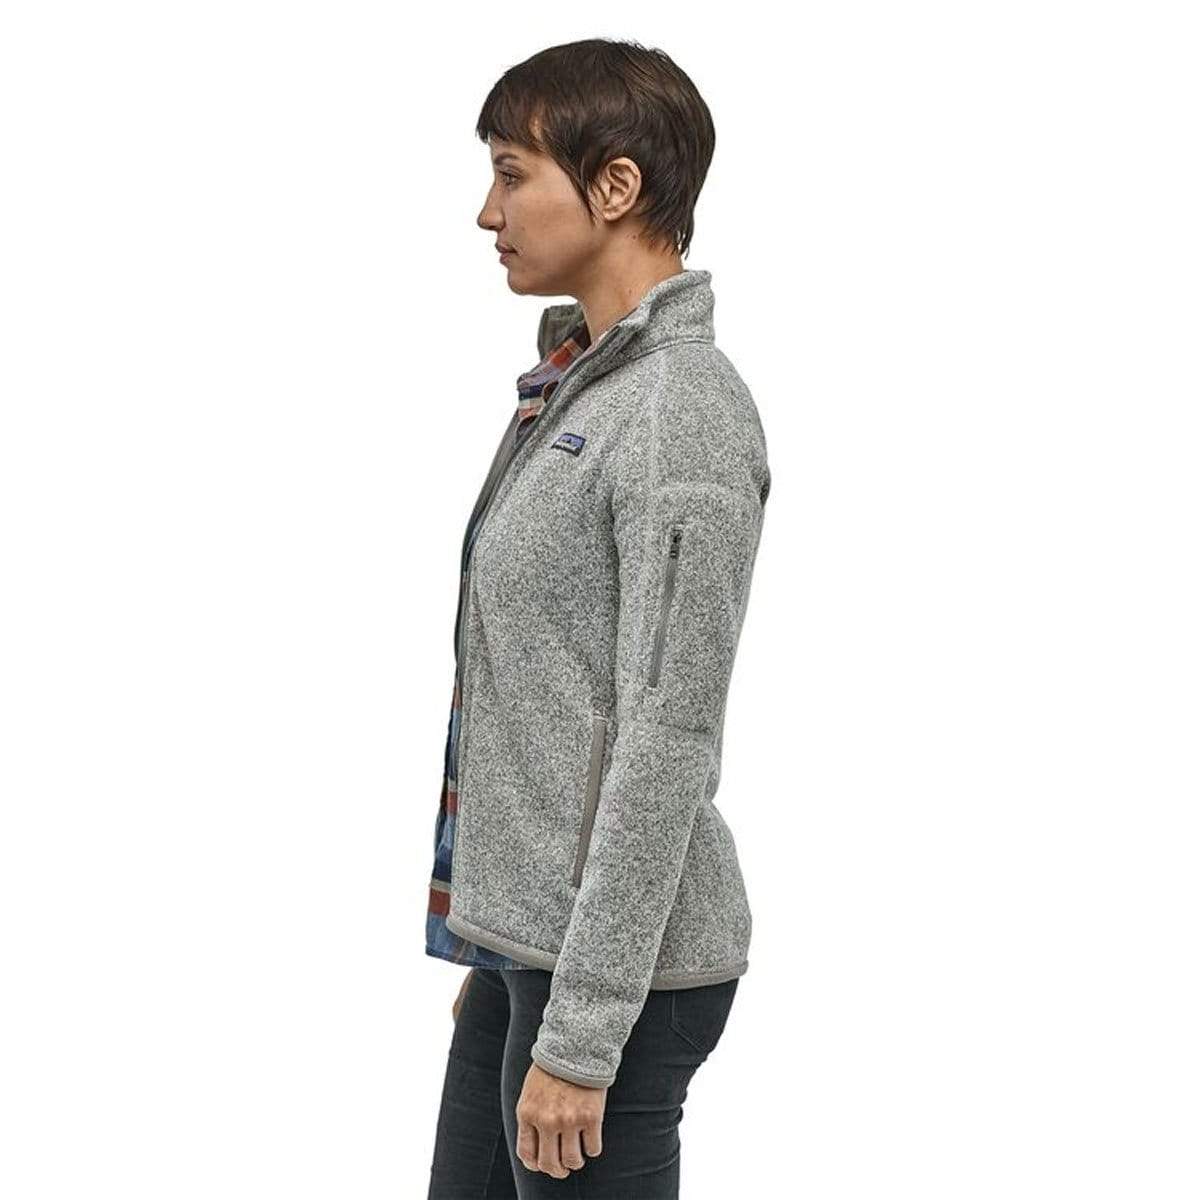 Patagonia Better Sweater Jacket - Women's - Clothing